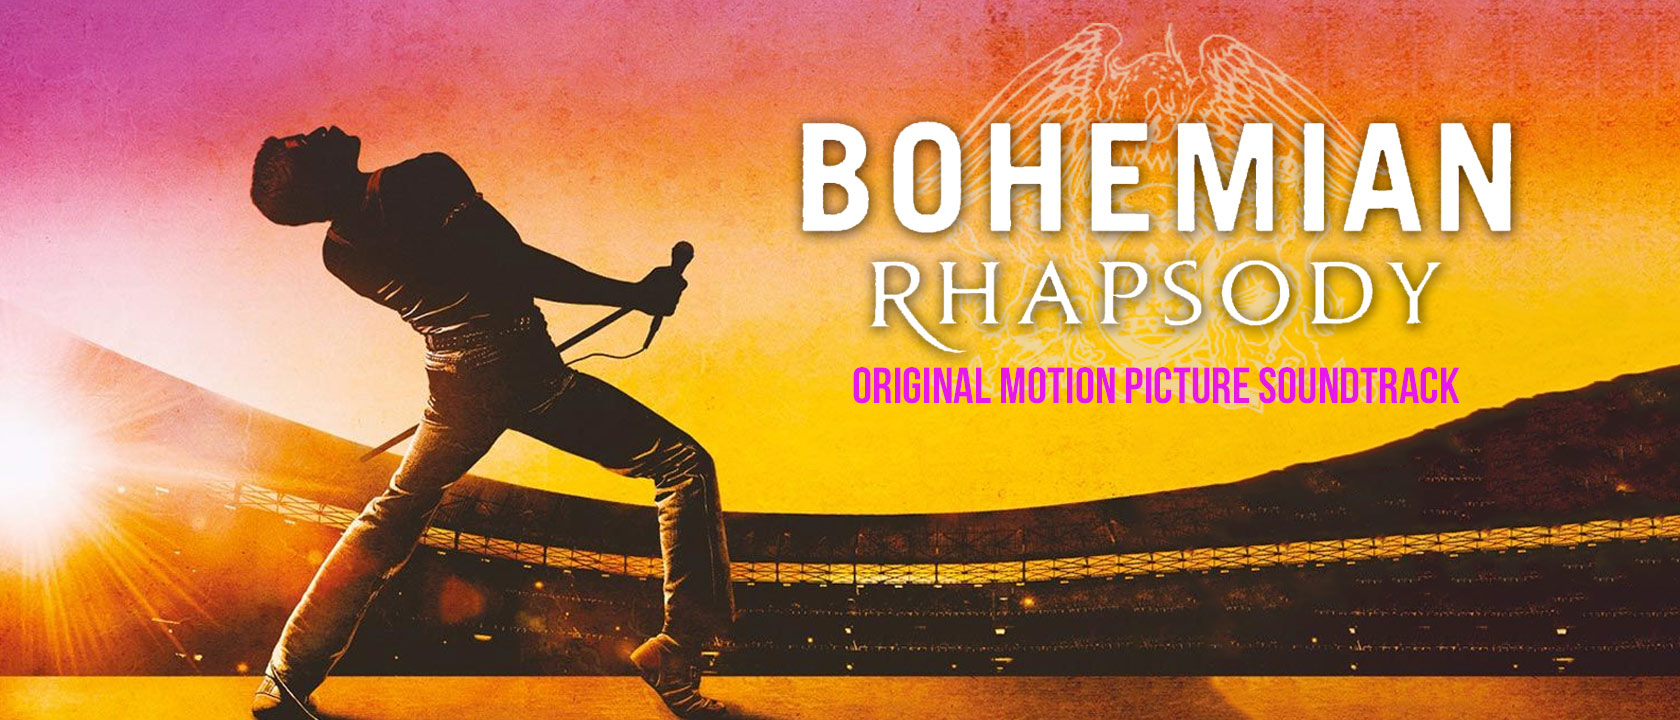 download the new for mac Bohemian Rhapsody